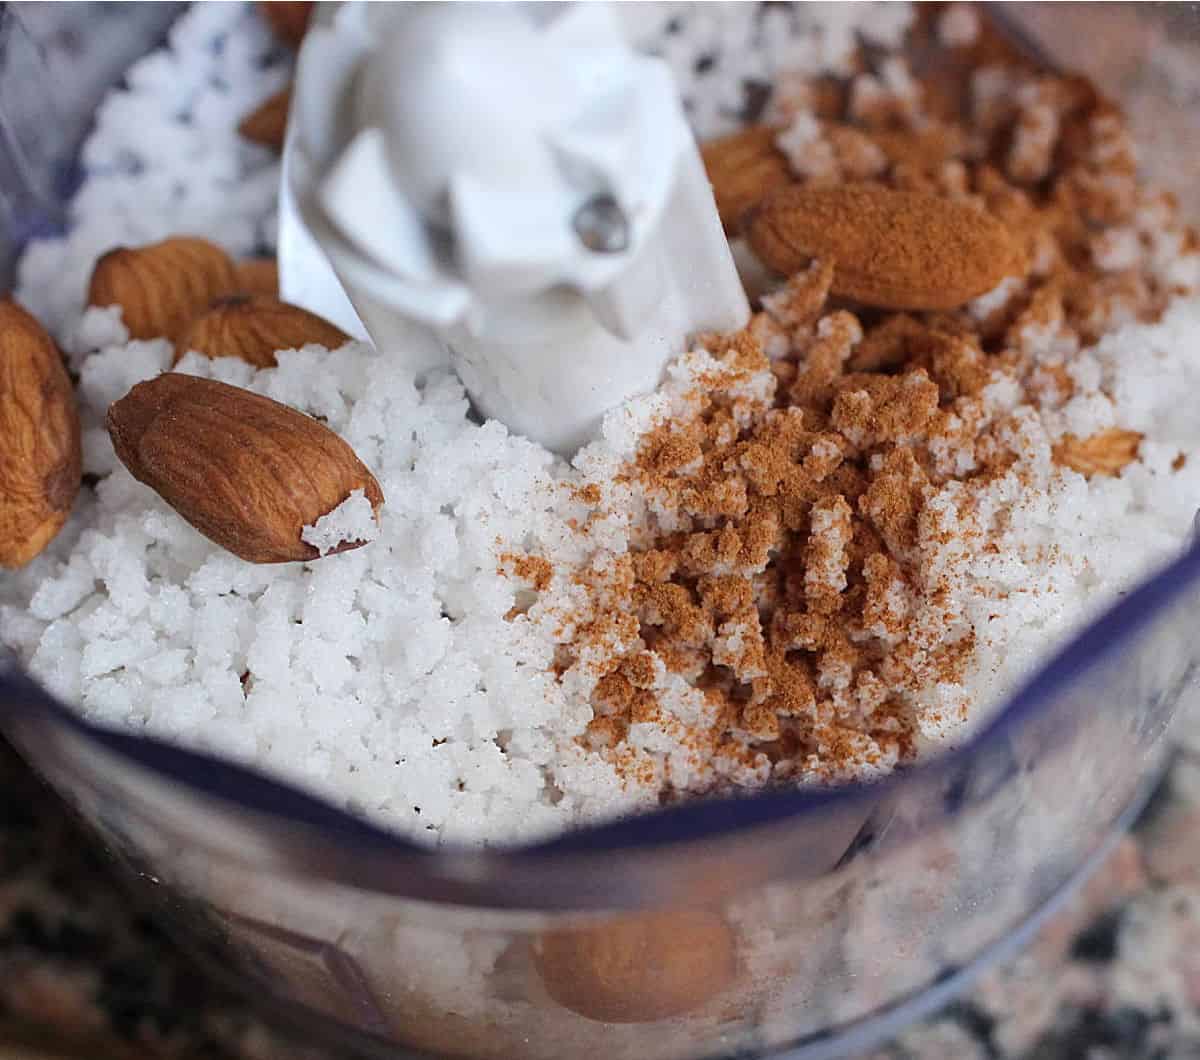 Top view of coarse pearl sugar, cinnamon and almonds in food processor bowl